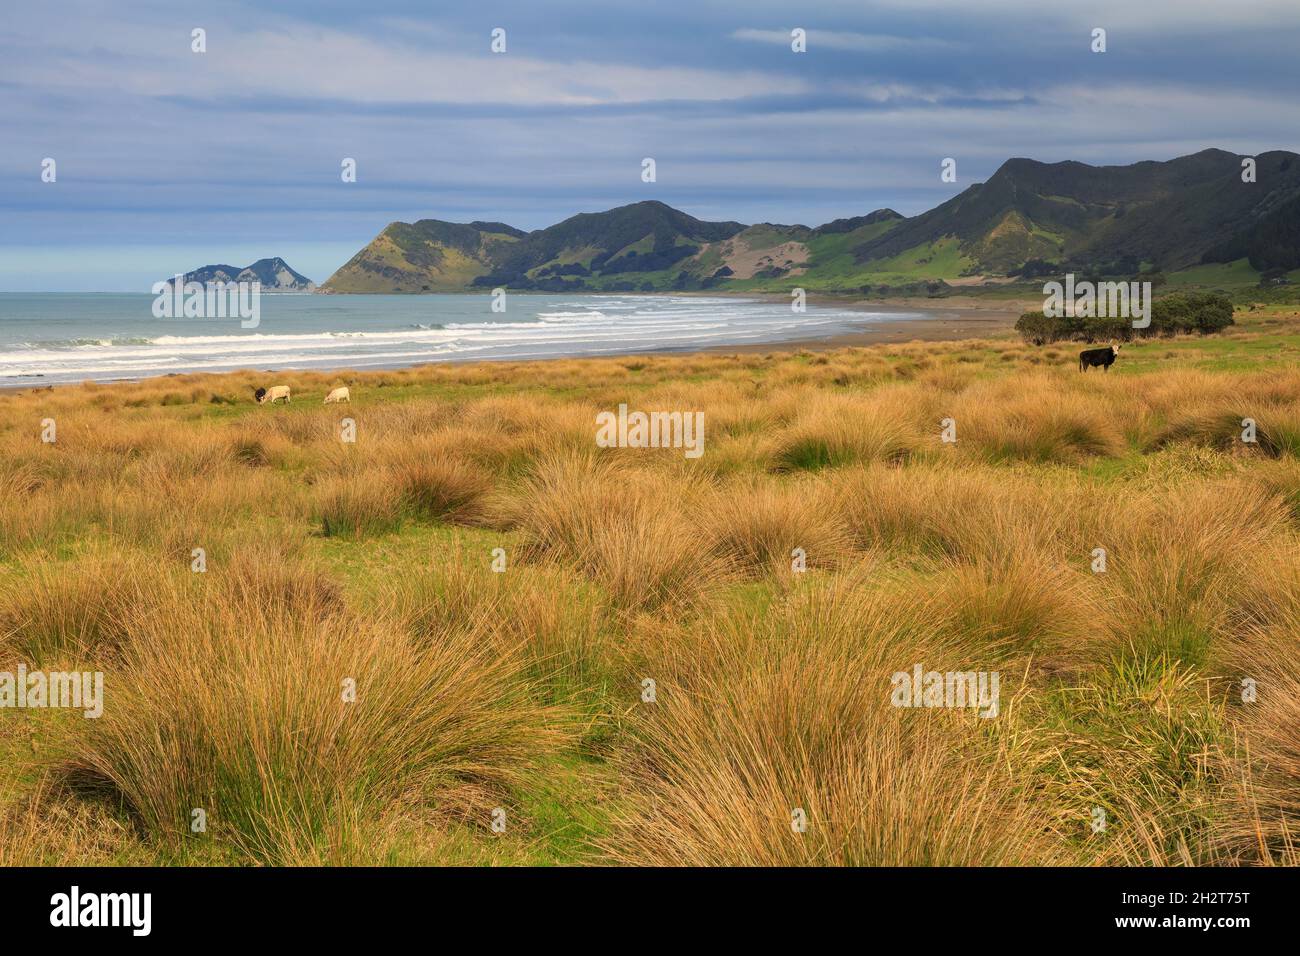 East Cape, der östlichste Punkt Neuseelands. Kühe grasen am Strand. Dahinter liegt das Kap selbst und Whangaokeno / East Island Stockfoto